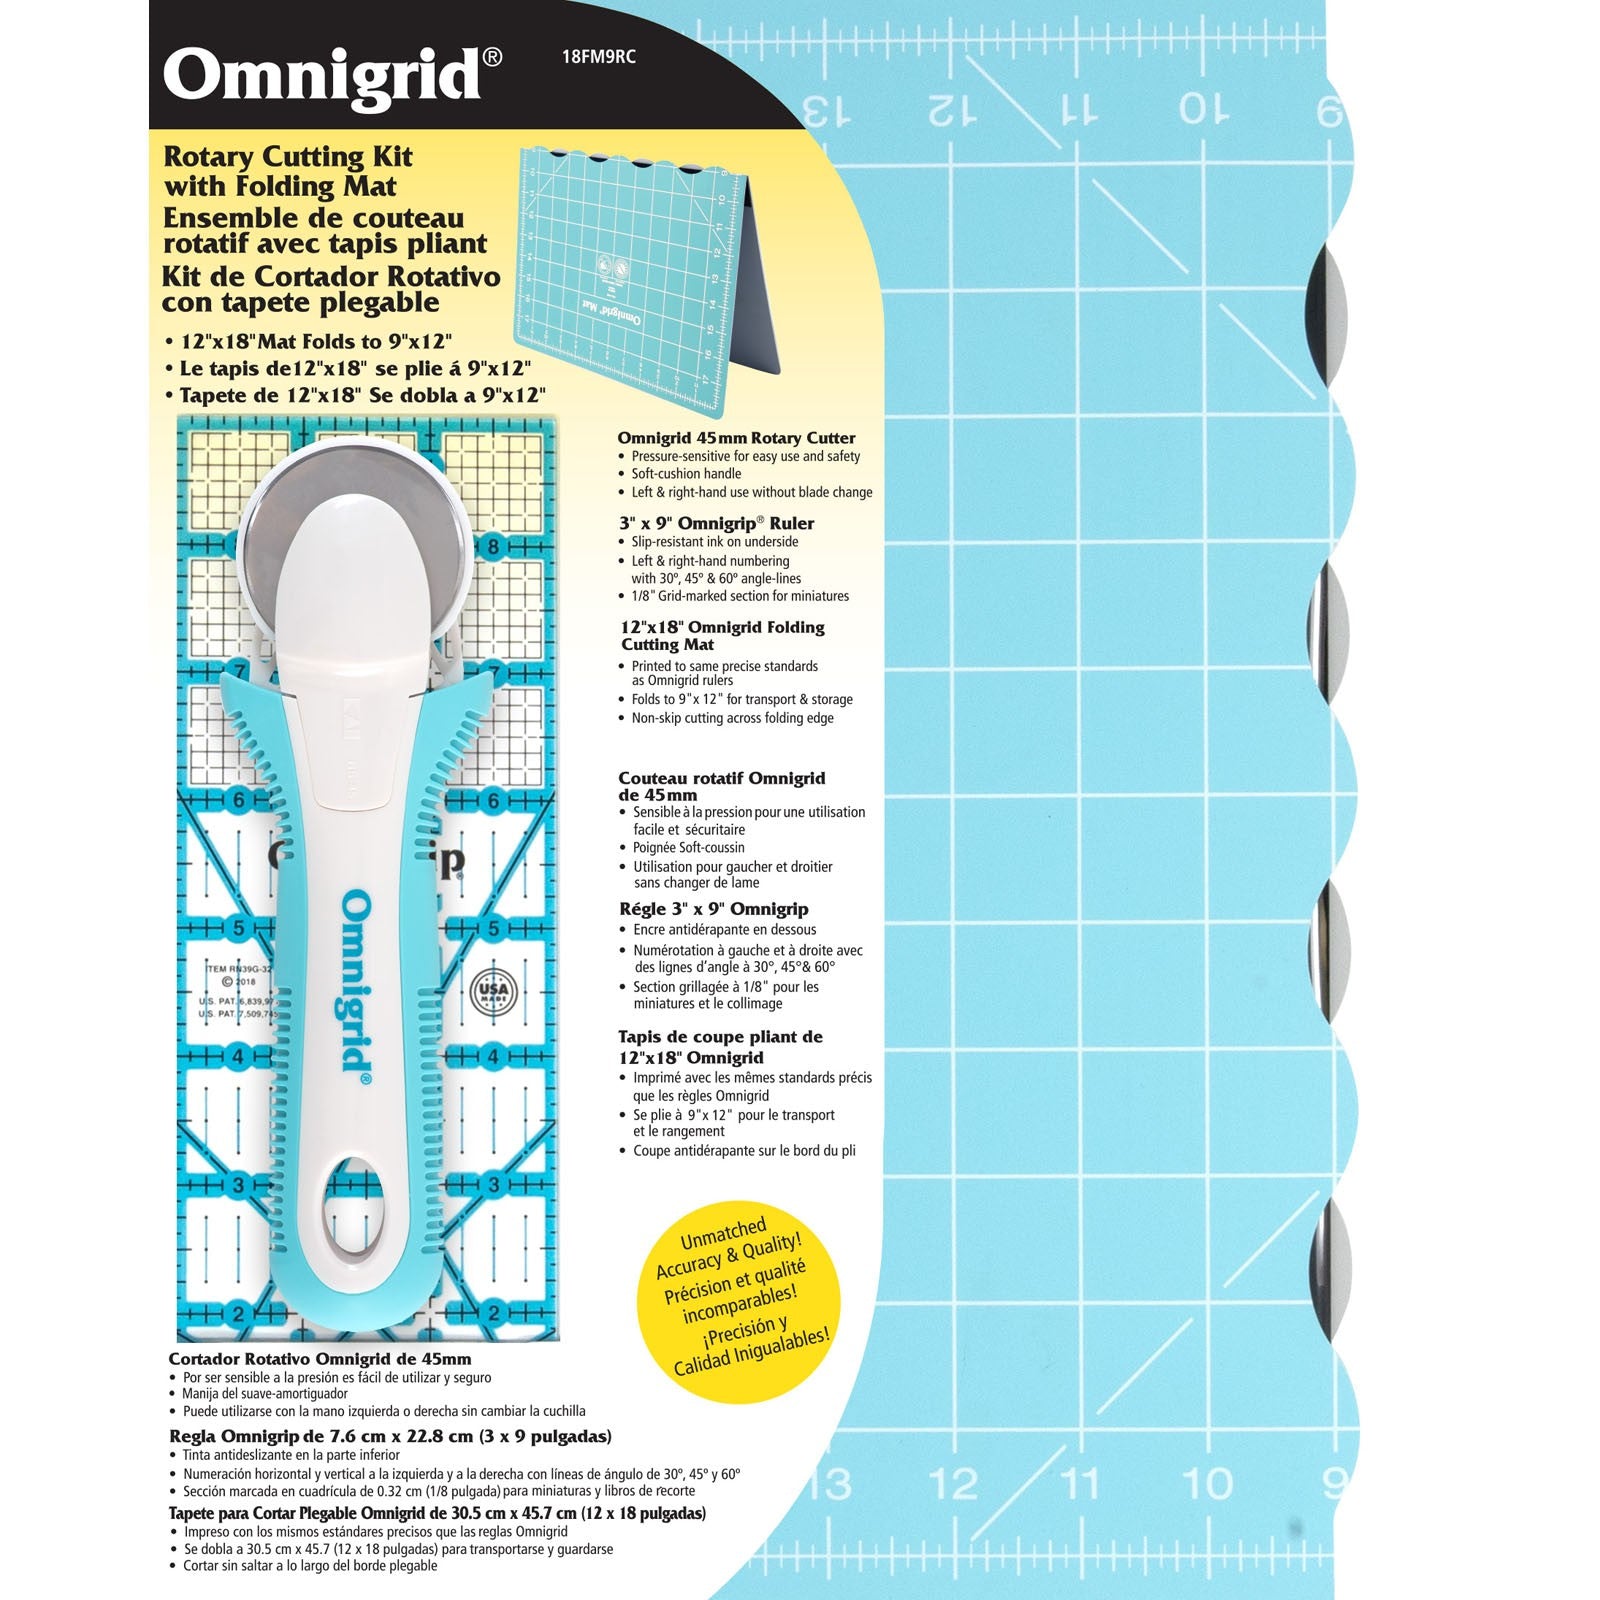 OmniGrid Rotary Cutting Kit